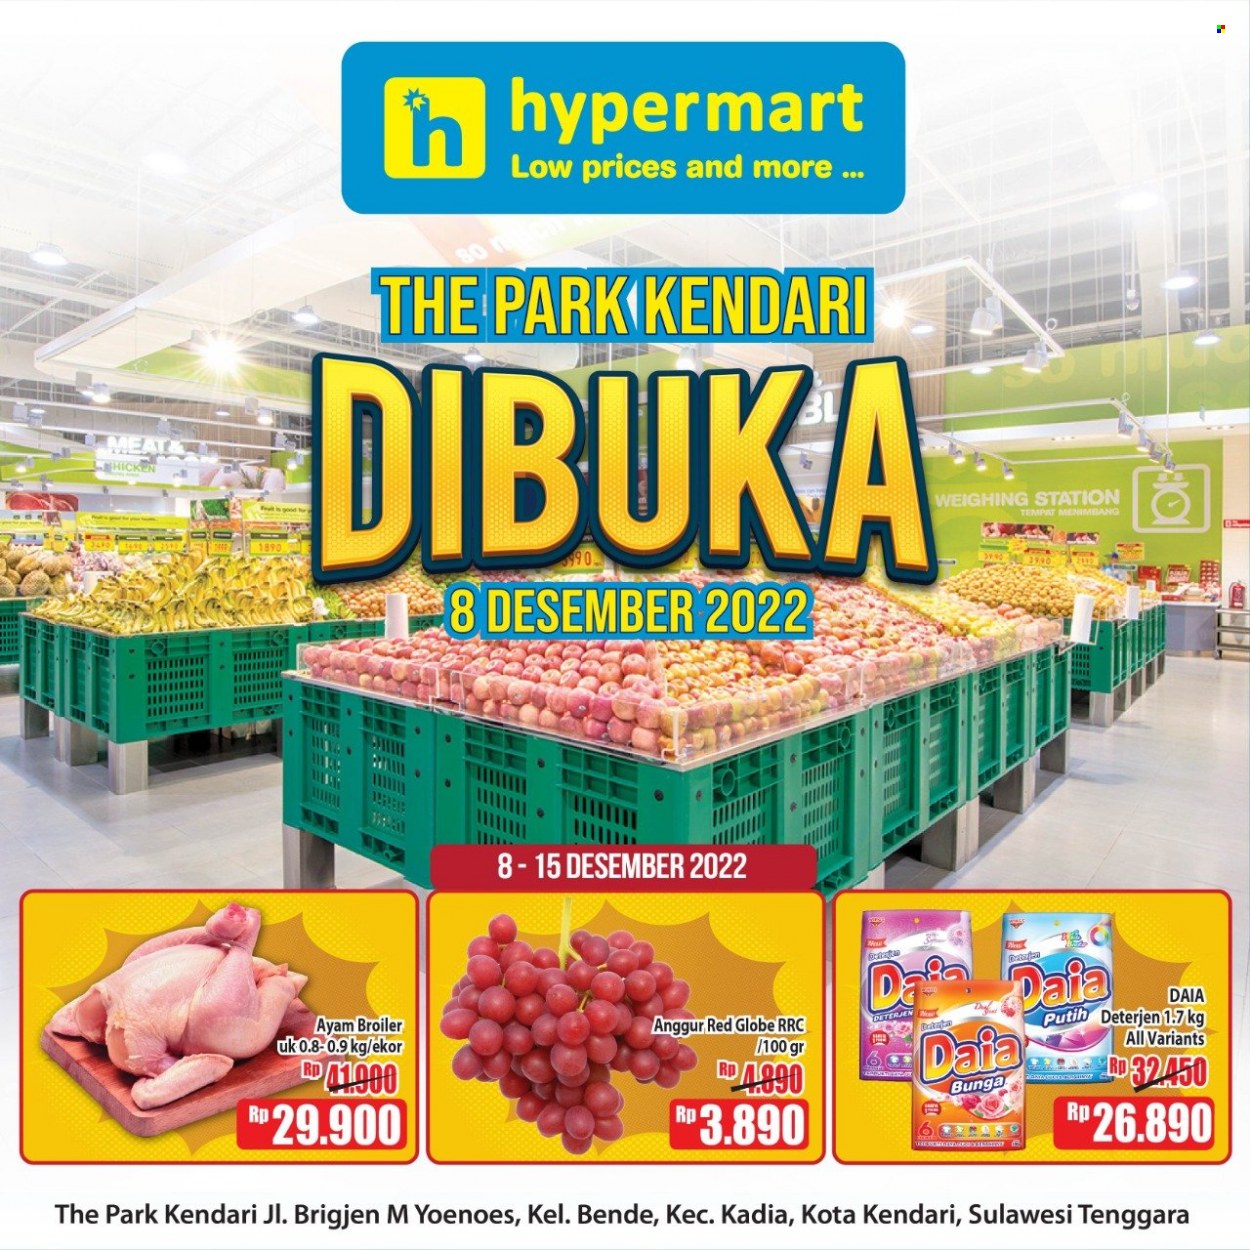 thumbnail - Promo Hypermart - 12/08/2022 - 12/15/2022 - Produk diskon - chicken, red globe grapes, daia, anggur, broiler, ayam. Halaman 1.